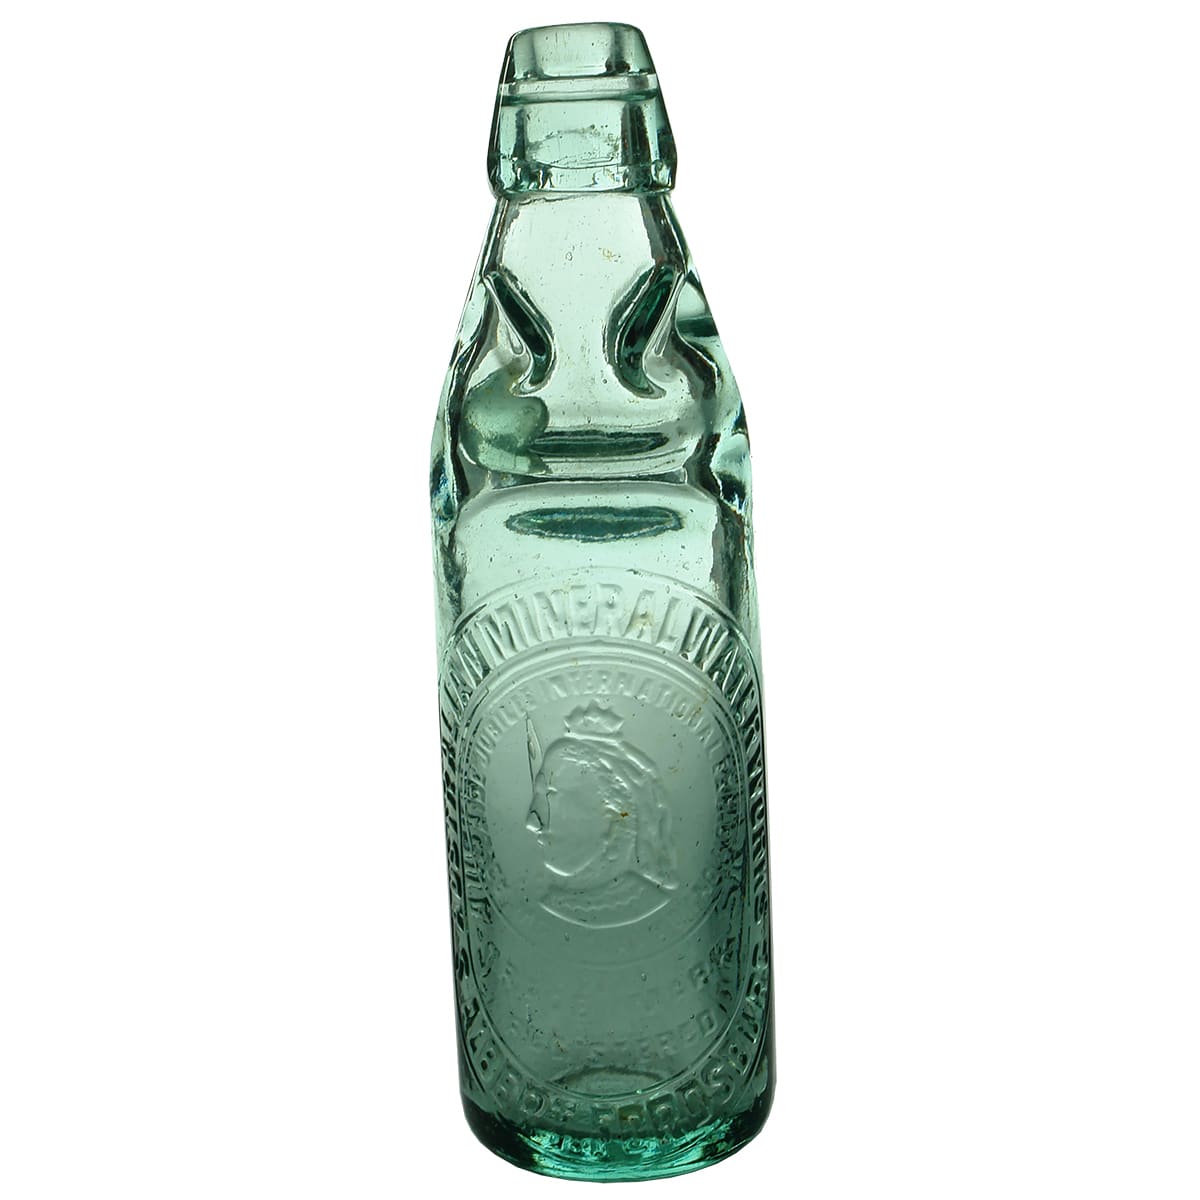 Codd. Australian Mineral Waters Works. Niagara Bottle. 10 oz.